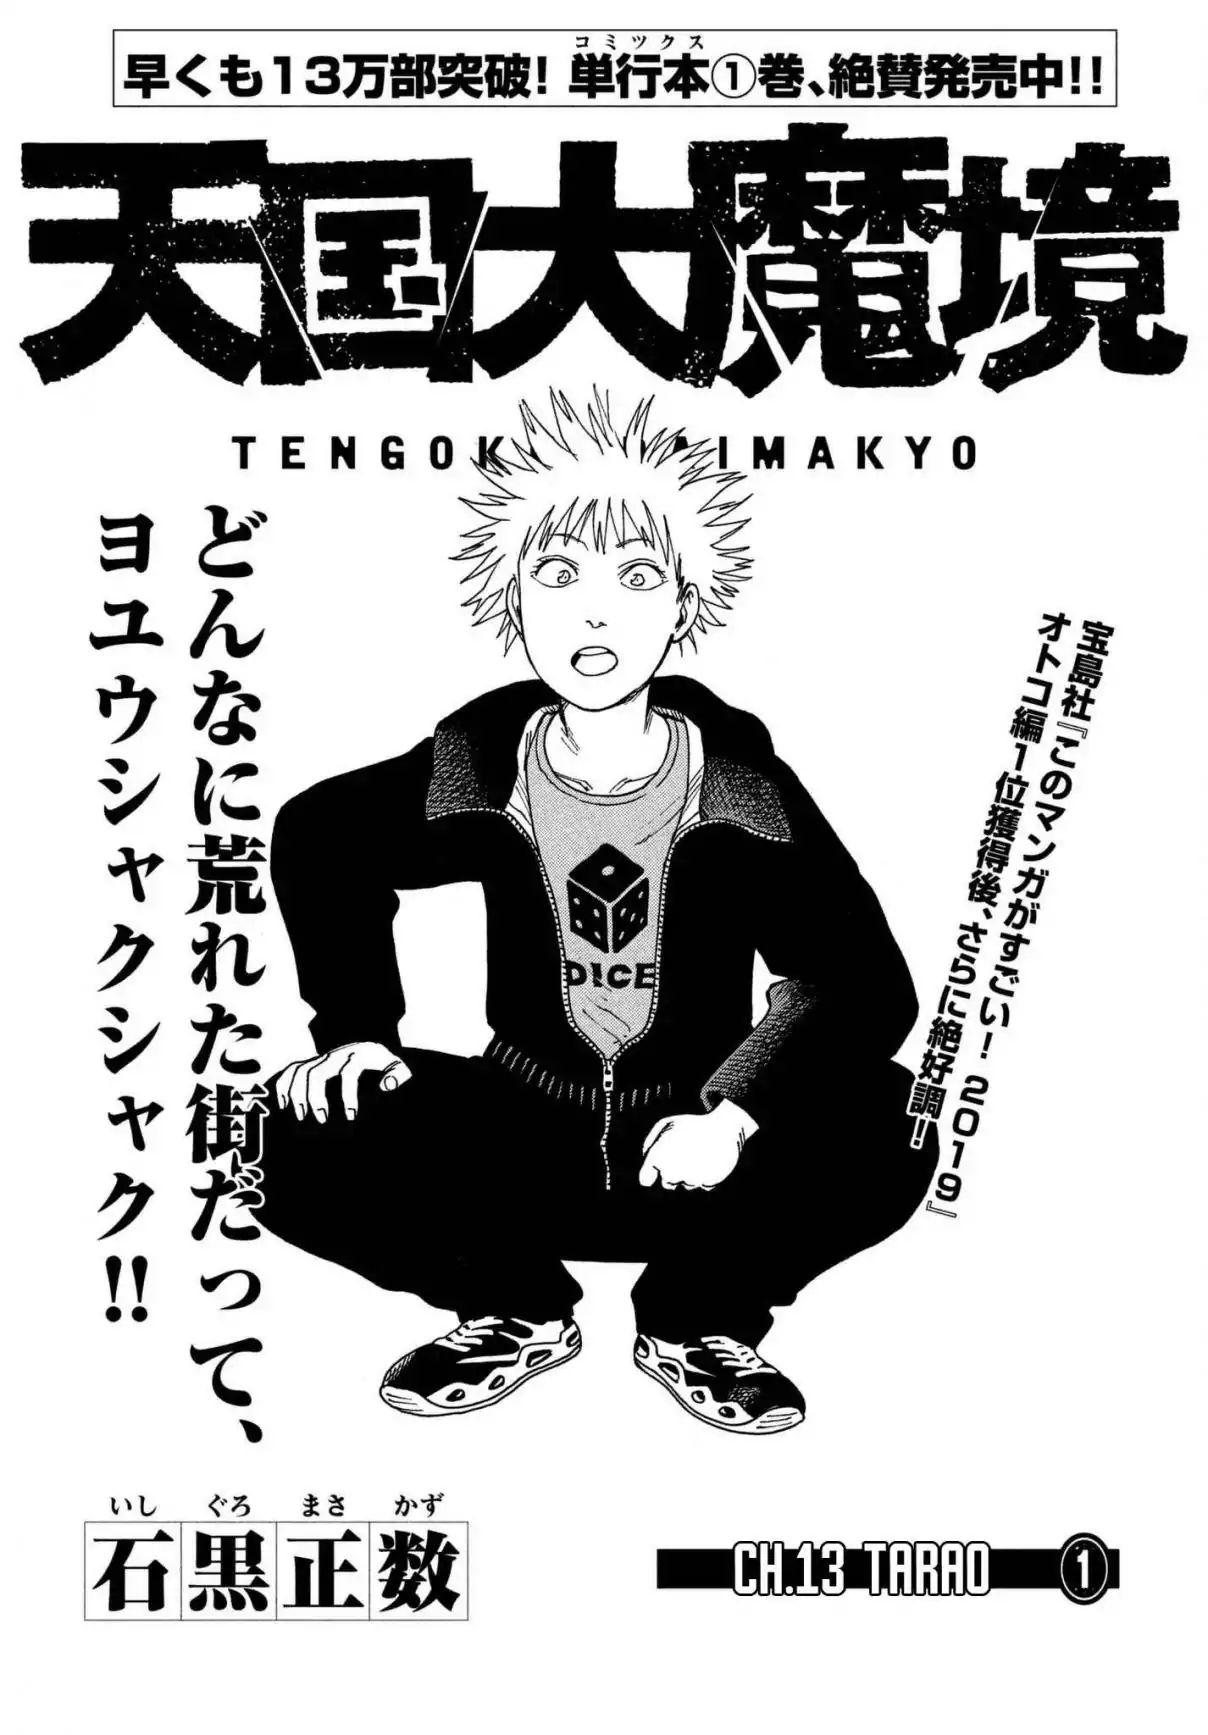 Read Tengoku Daimakyou Chapter 39: Dream Of Hell ➁ on Mangakakalot